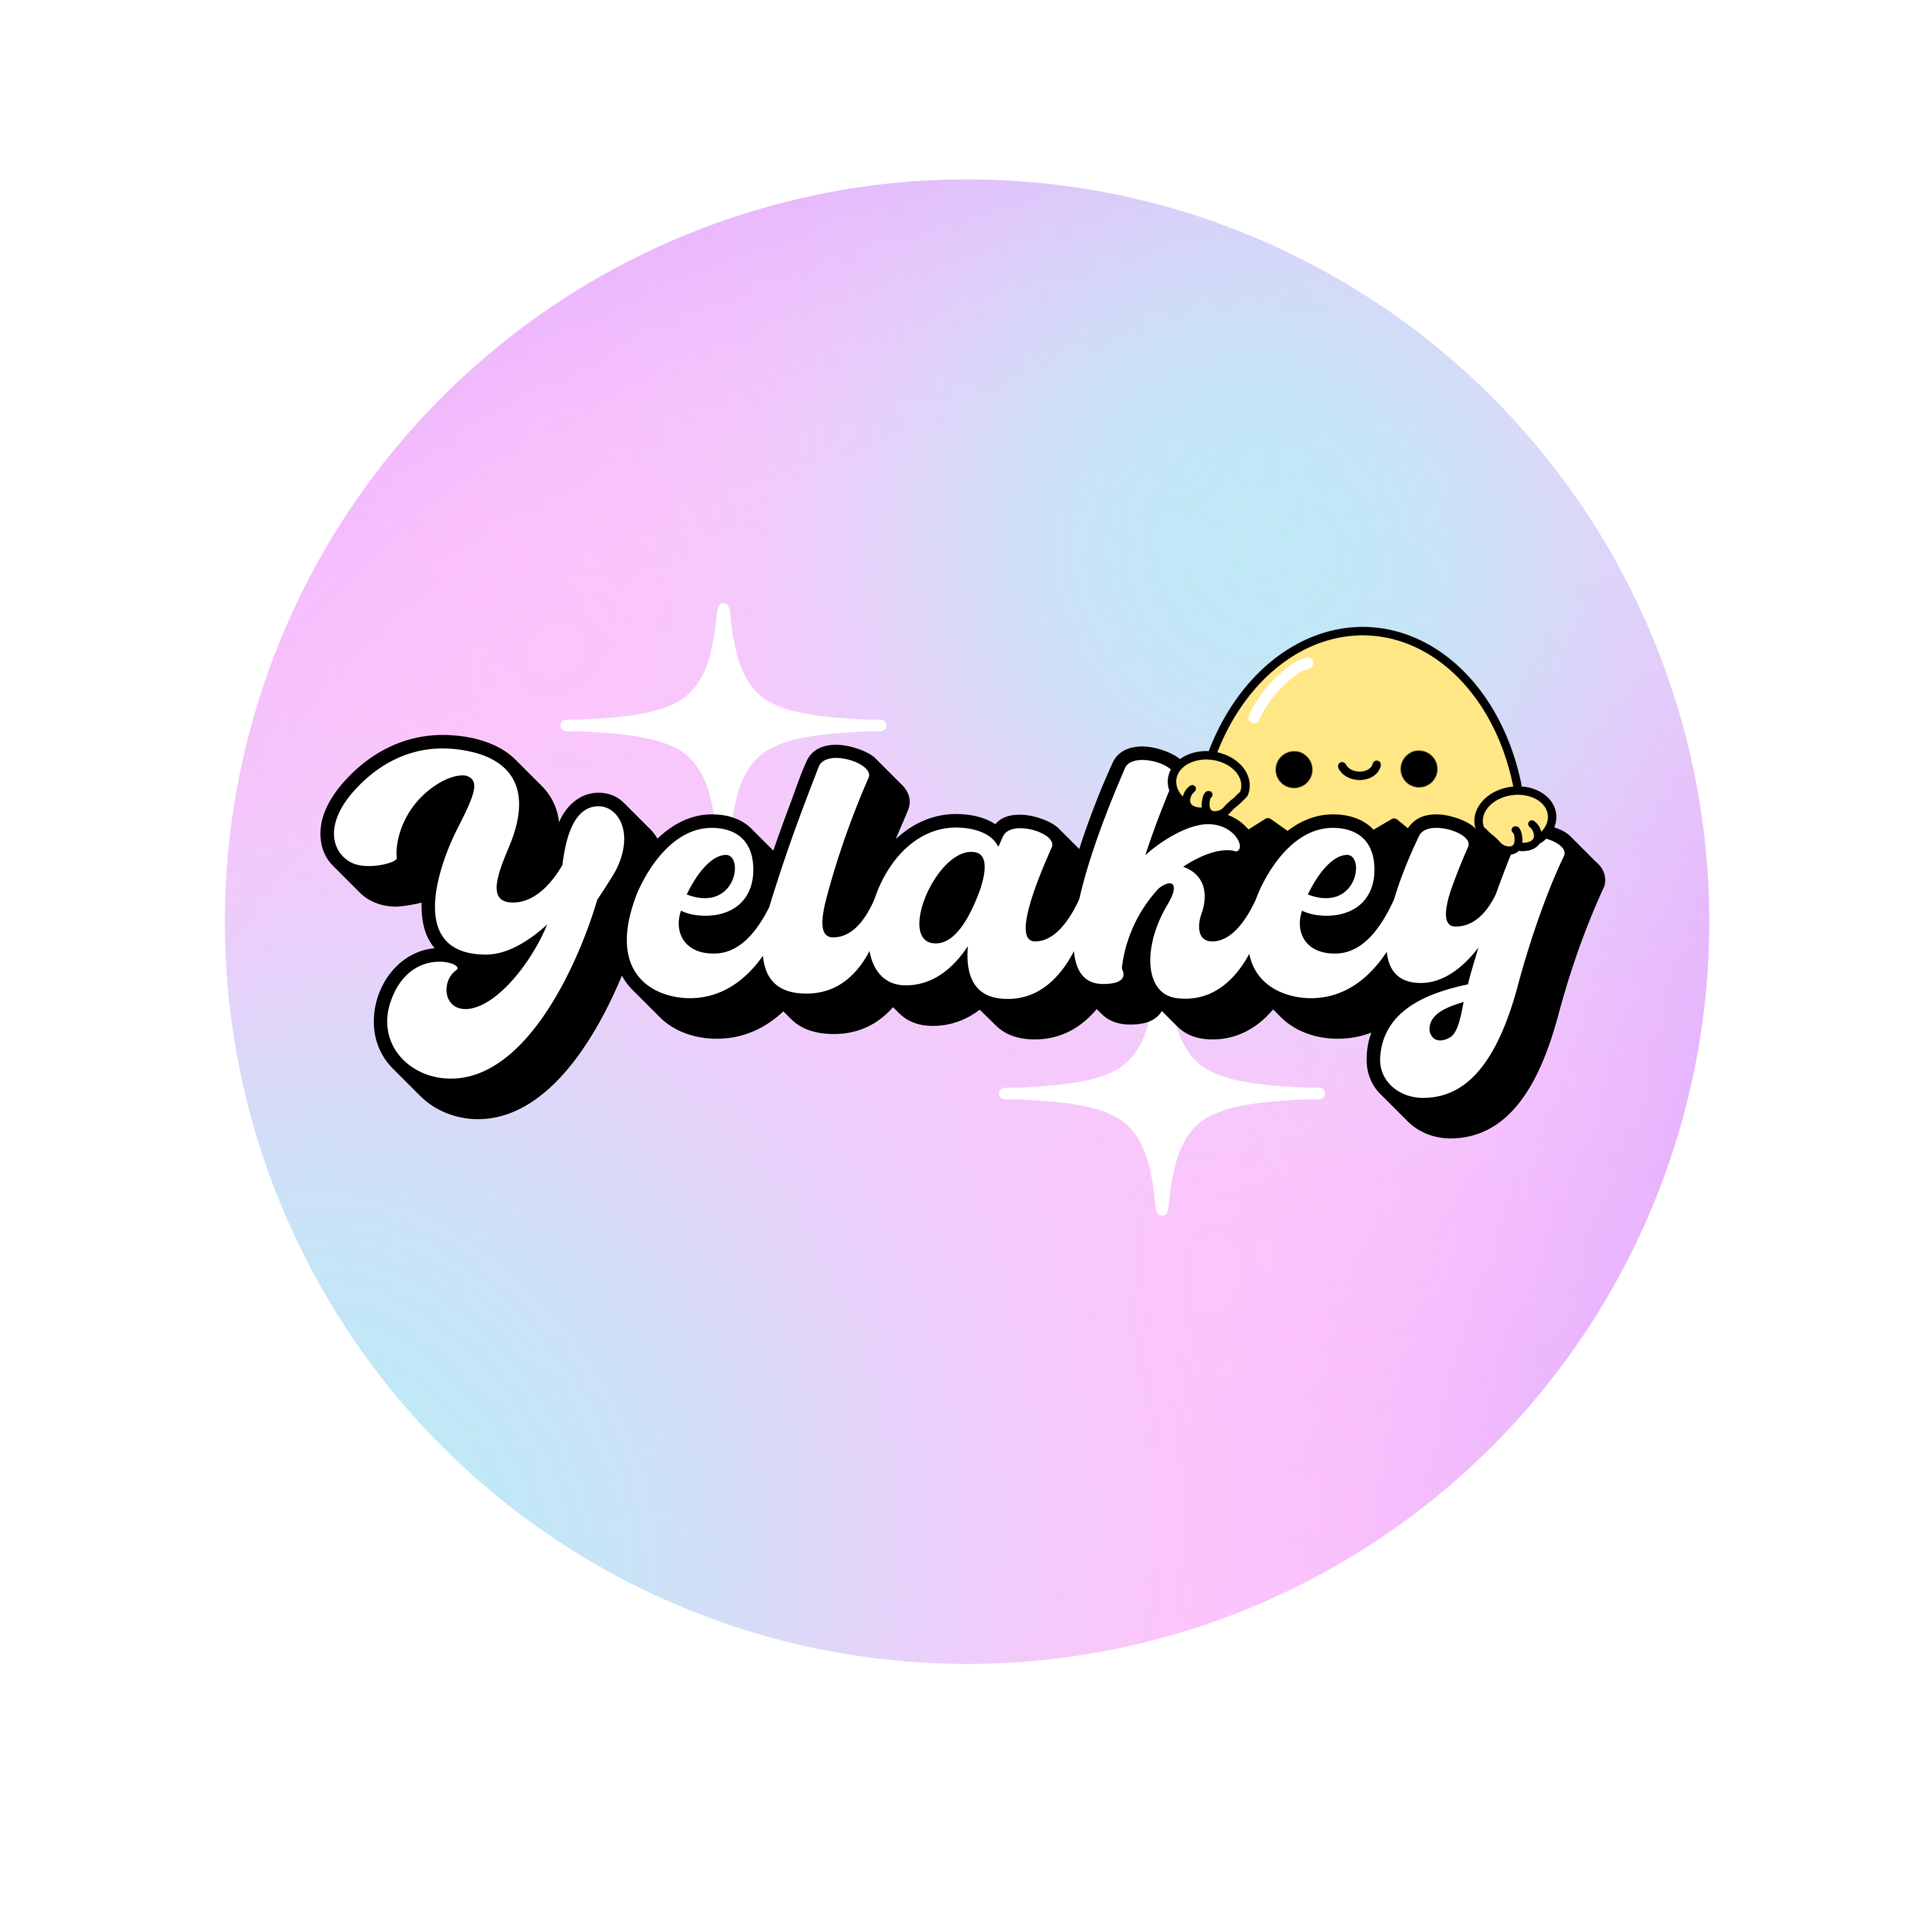 Yelakey